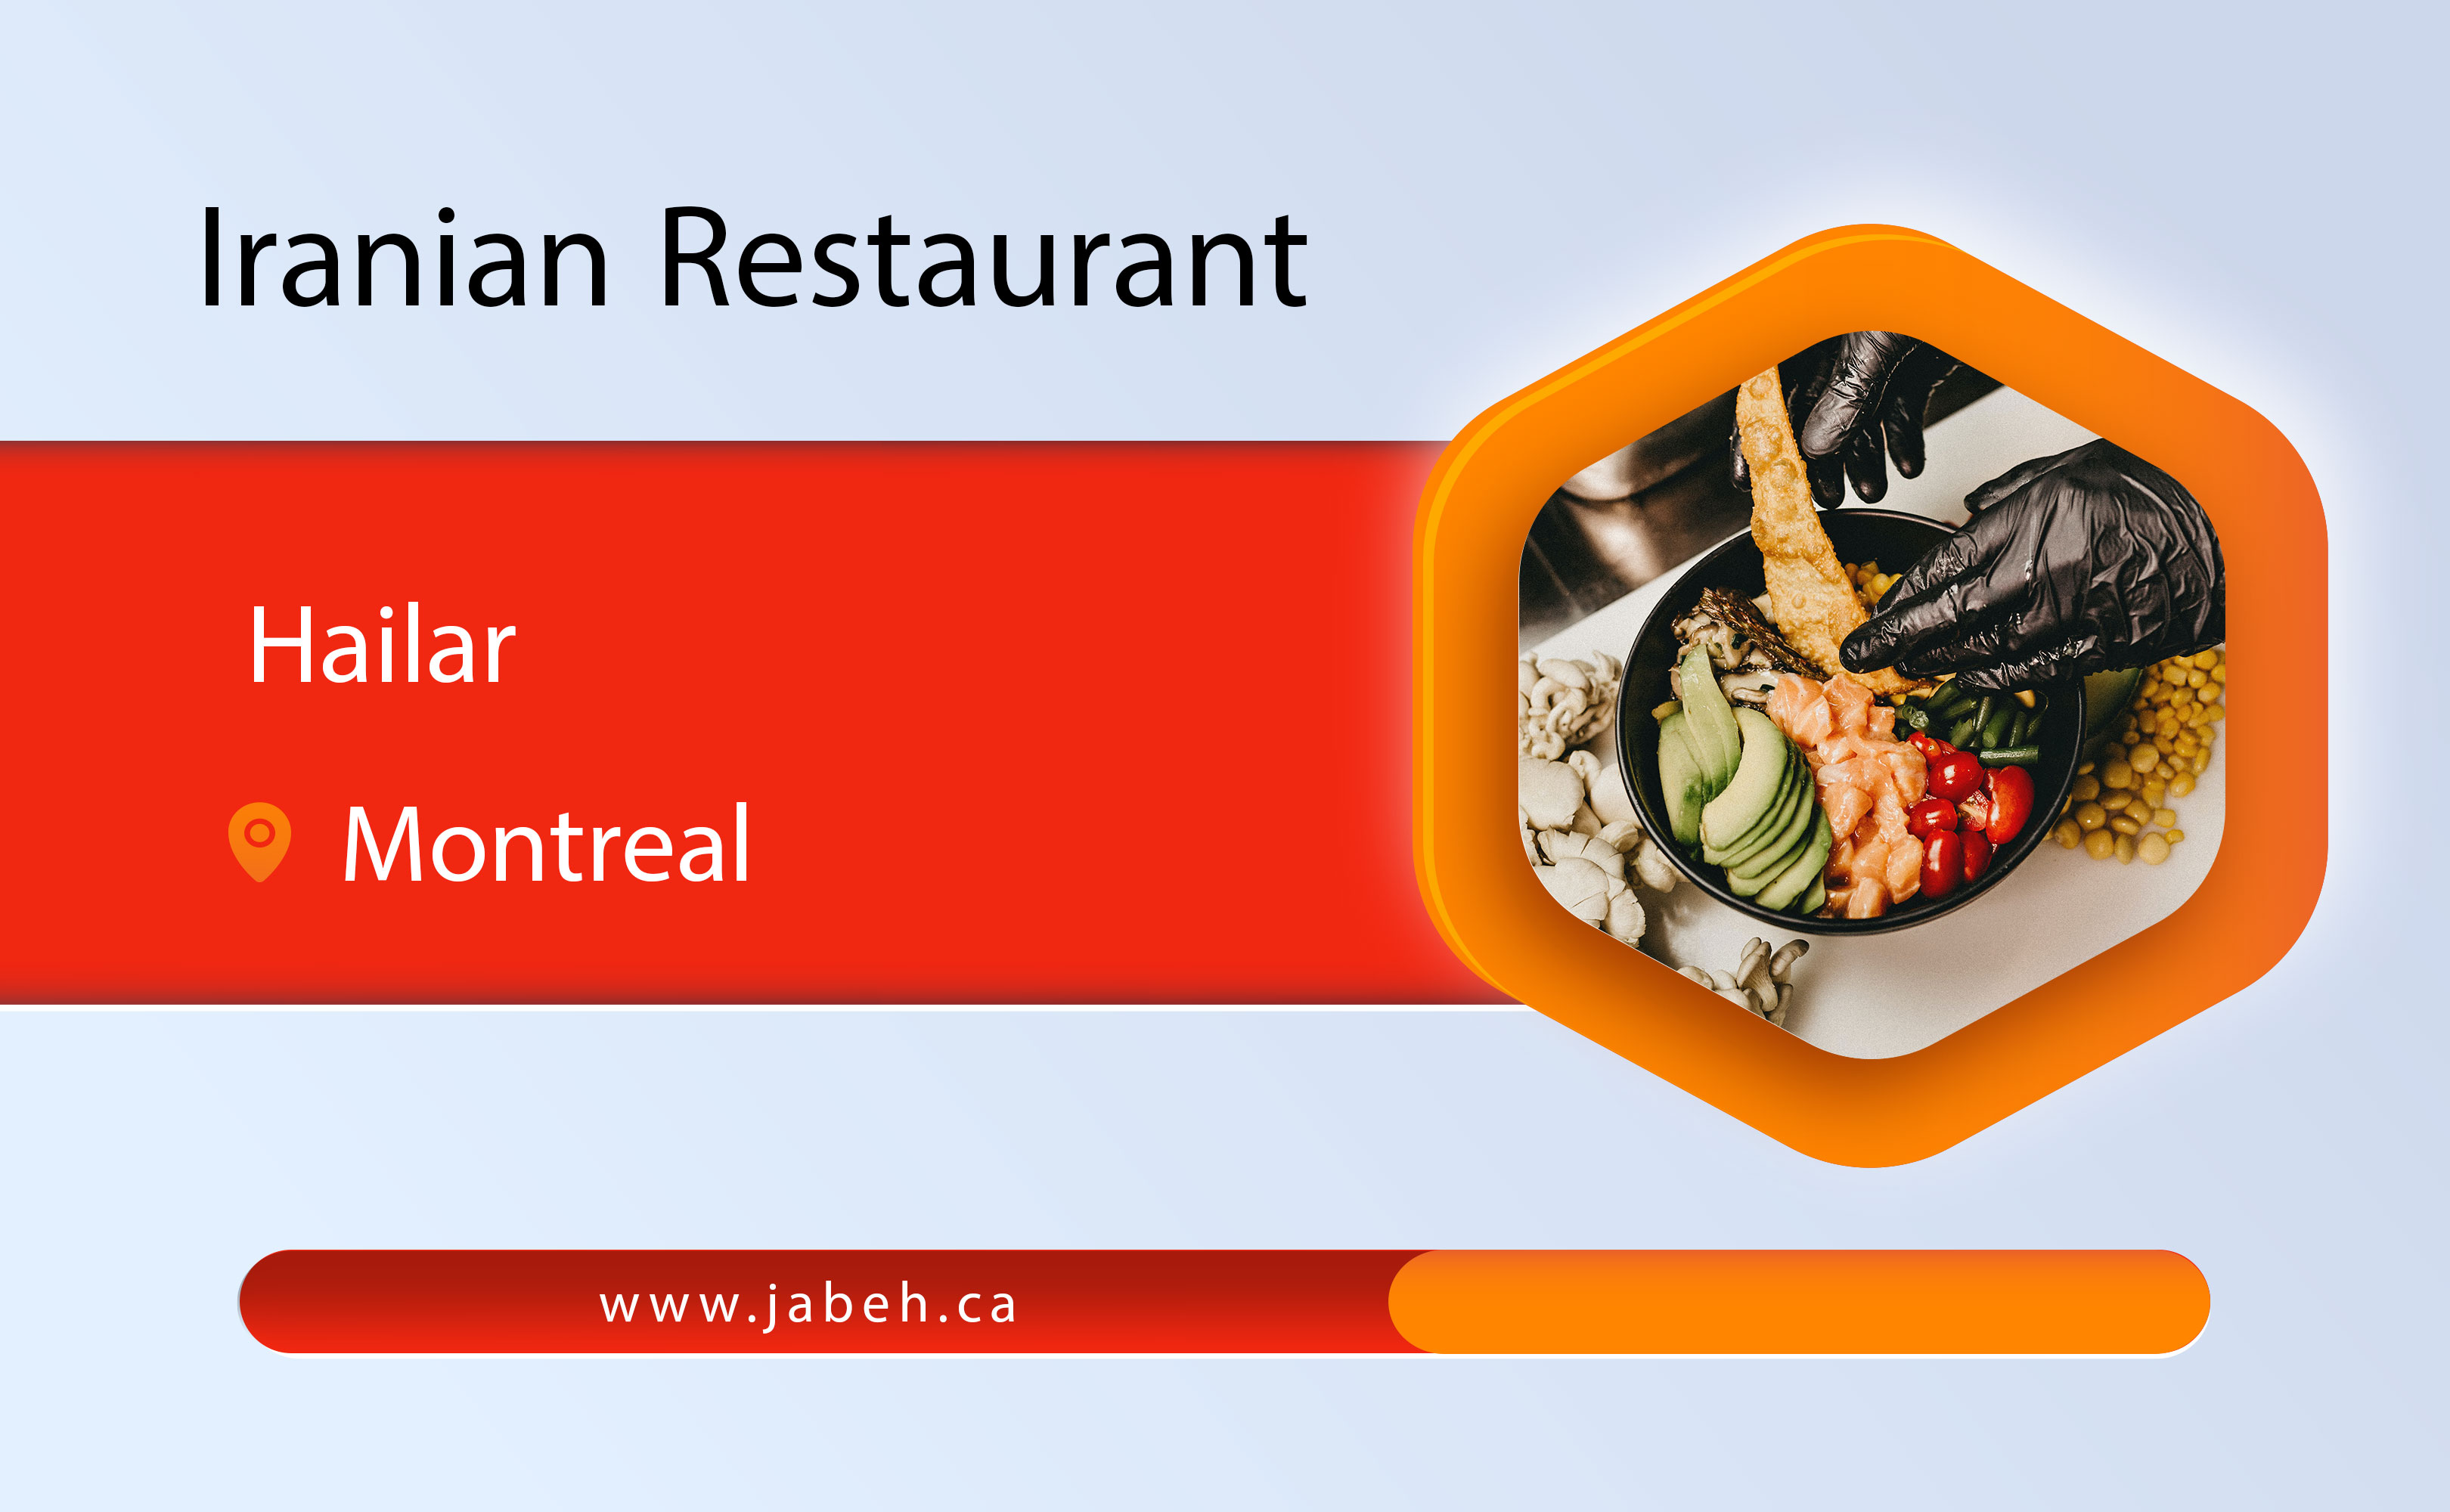 Hailar Iranian restaurant in Montreal